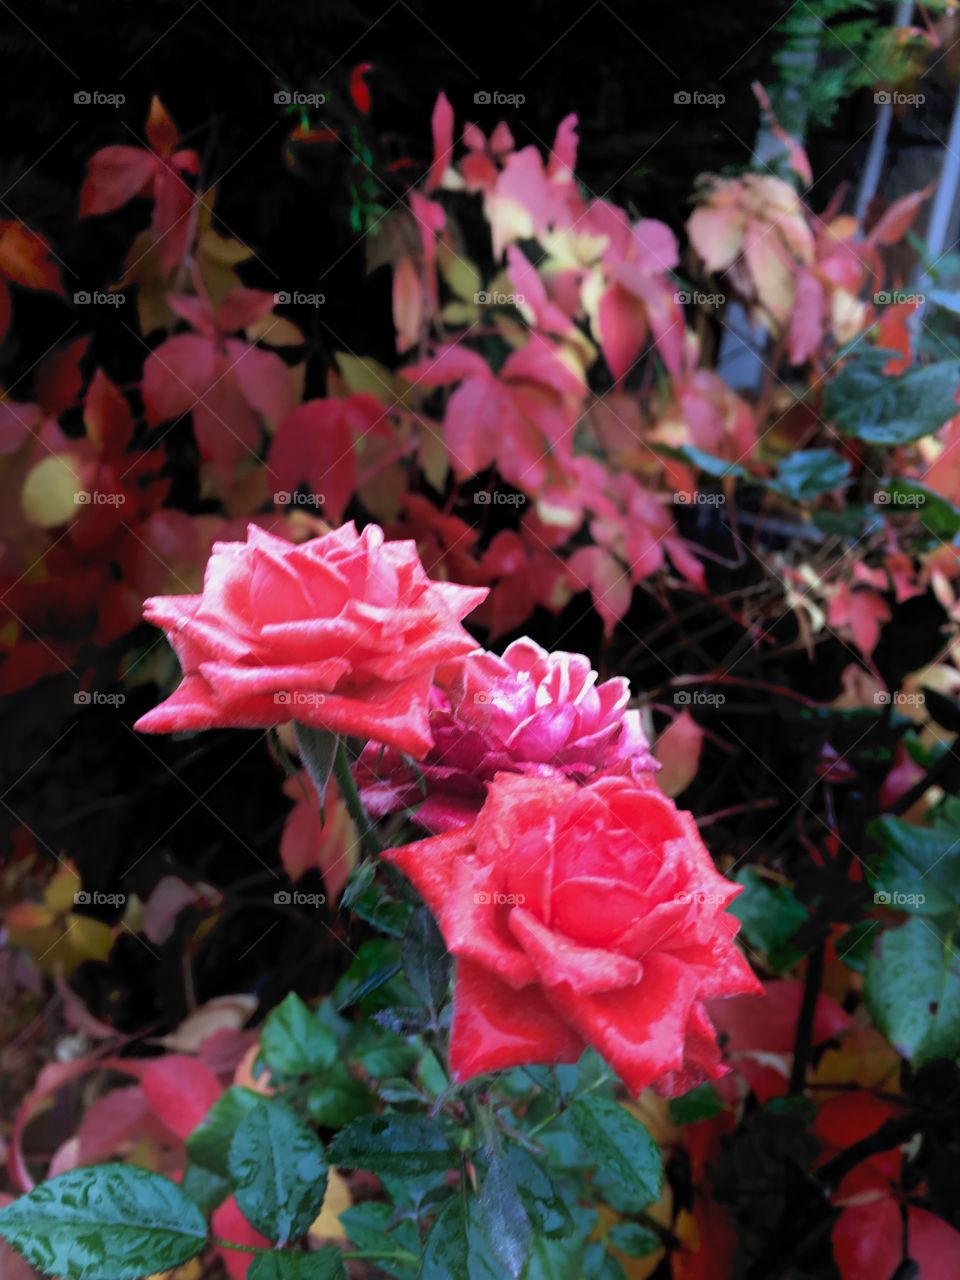 the last roses of autumn